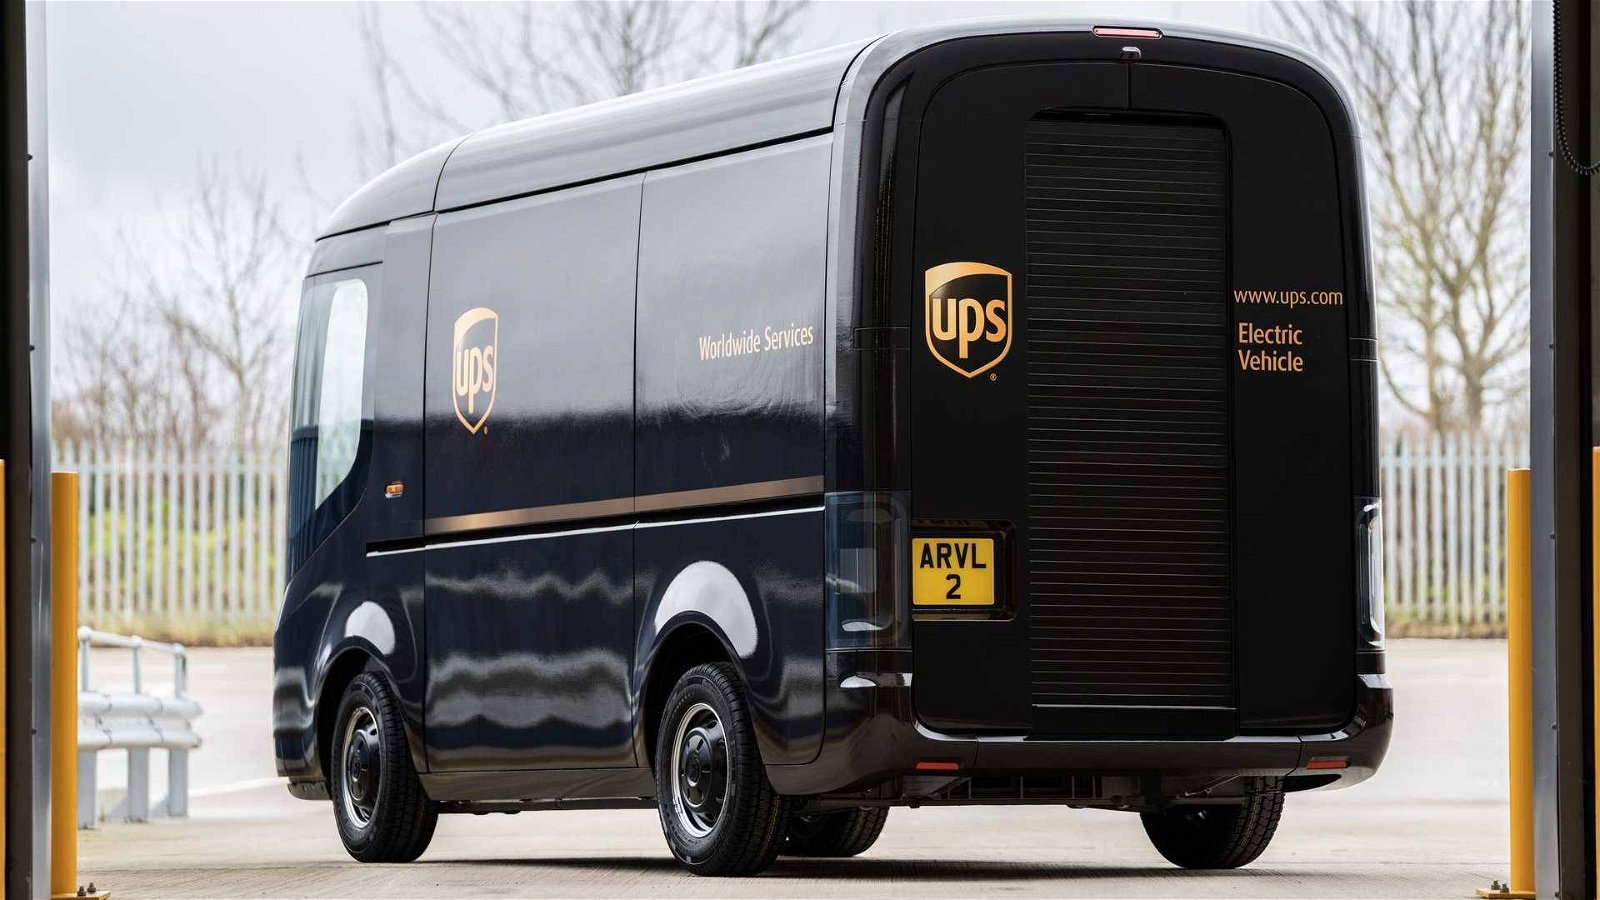 Immagine di UPS ordina 10 mila furgoni elettrici "Arrival" per le consegne